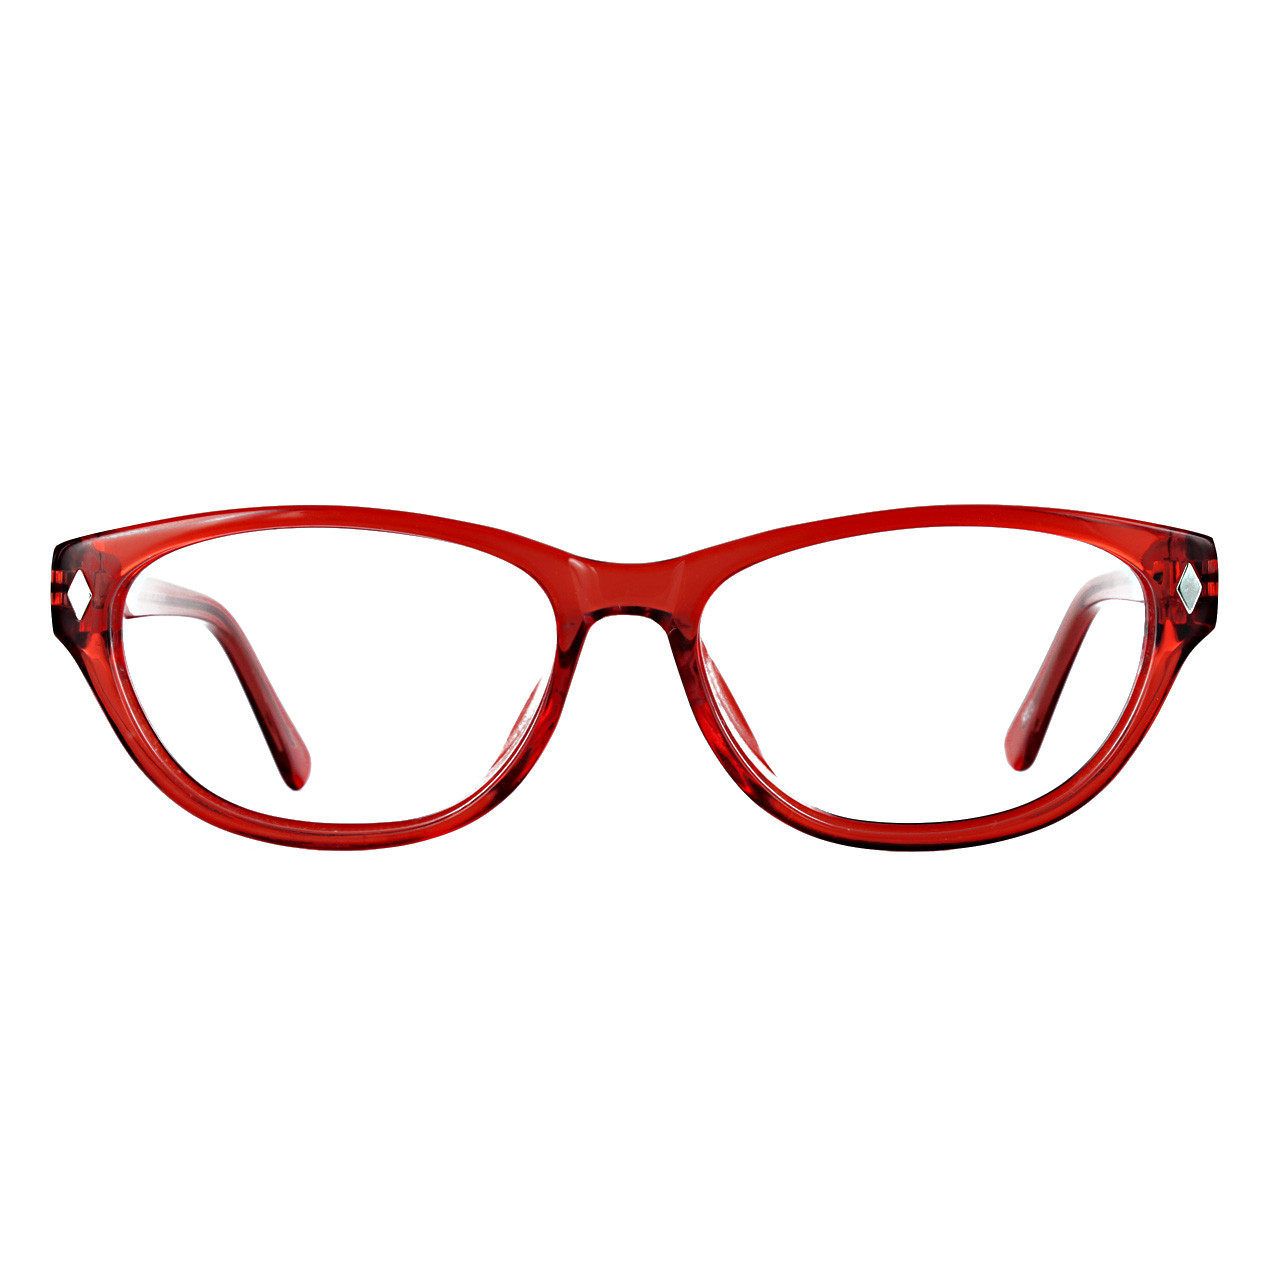 GEEK EYEWEAR ® RX Eyeglasses style CAT 03 | Sunglasses | Cat Collection ...